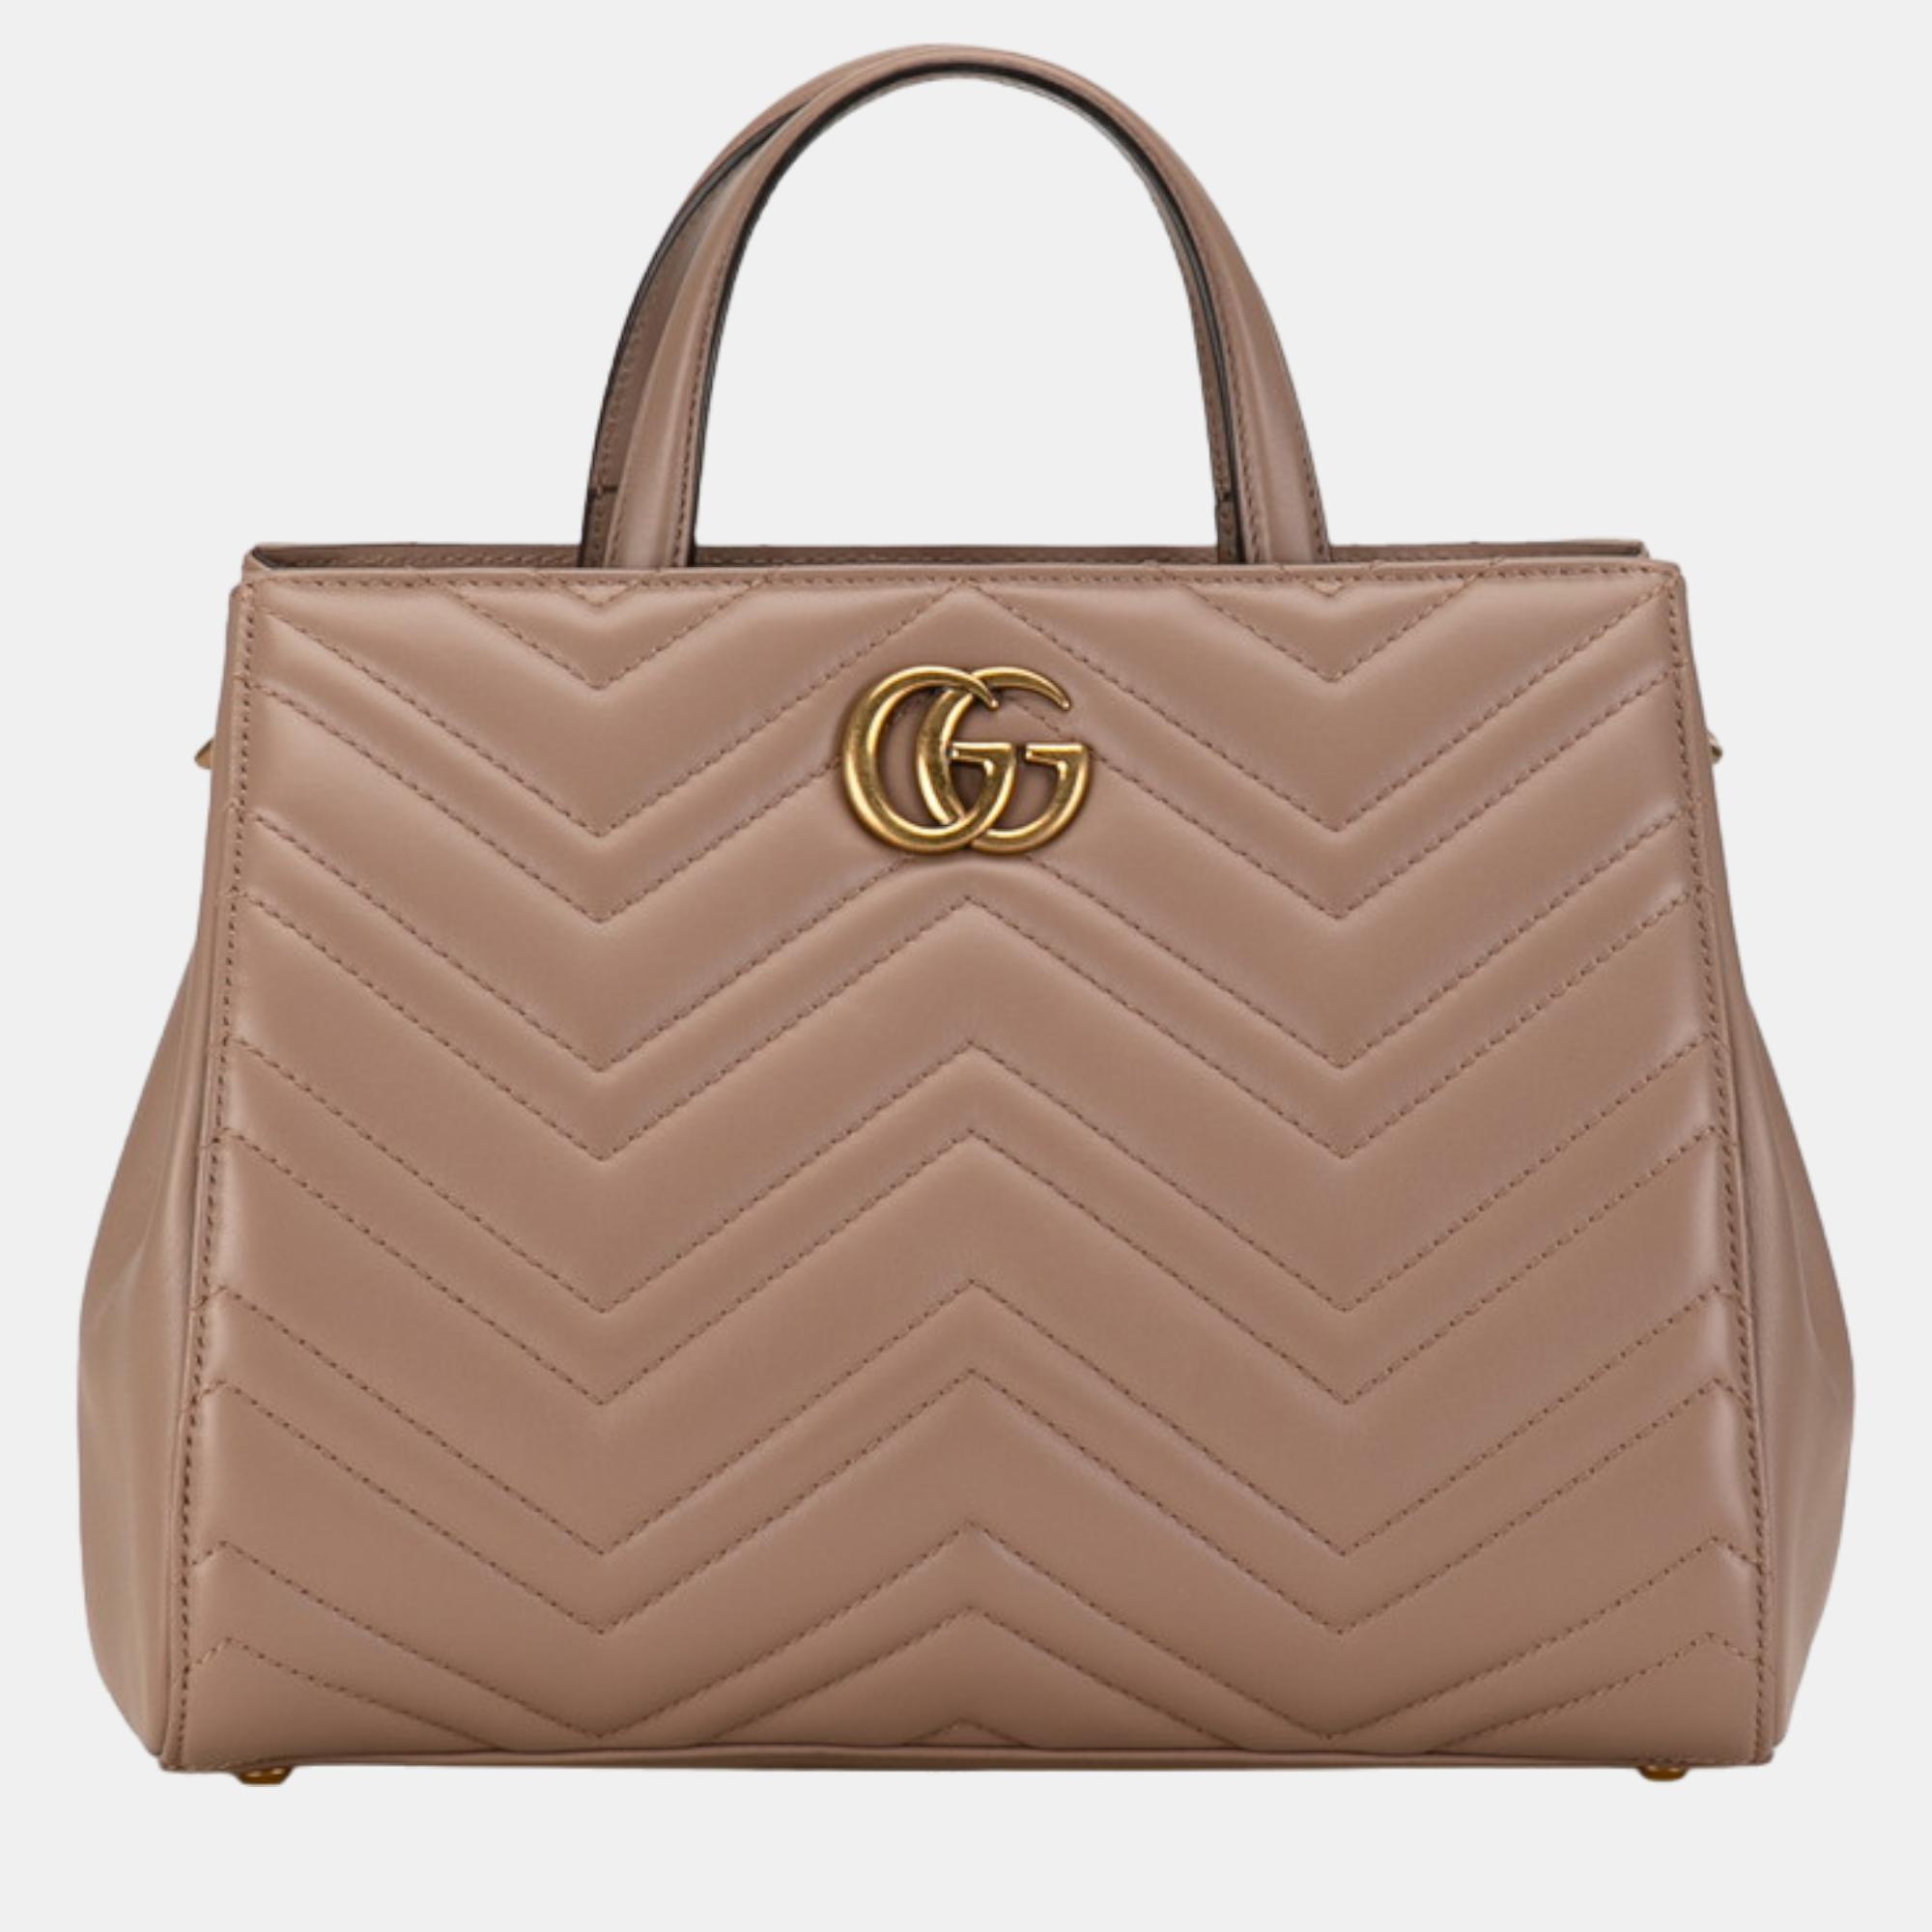 Gucci pink leather gg marmont matelasse handbag